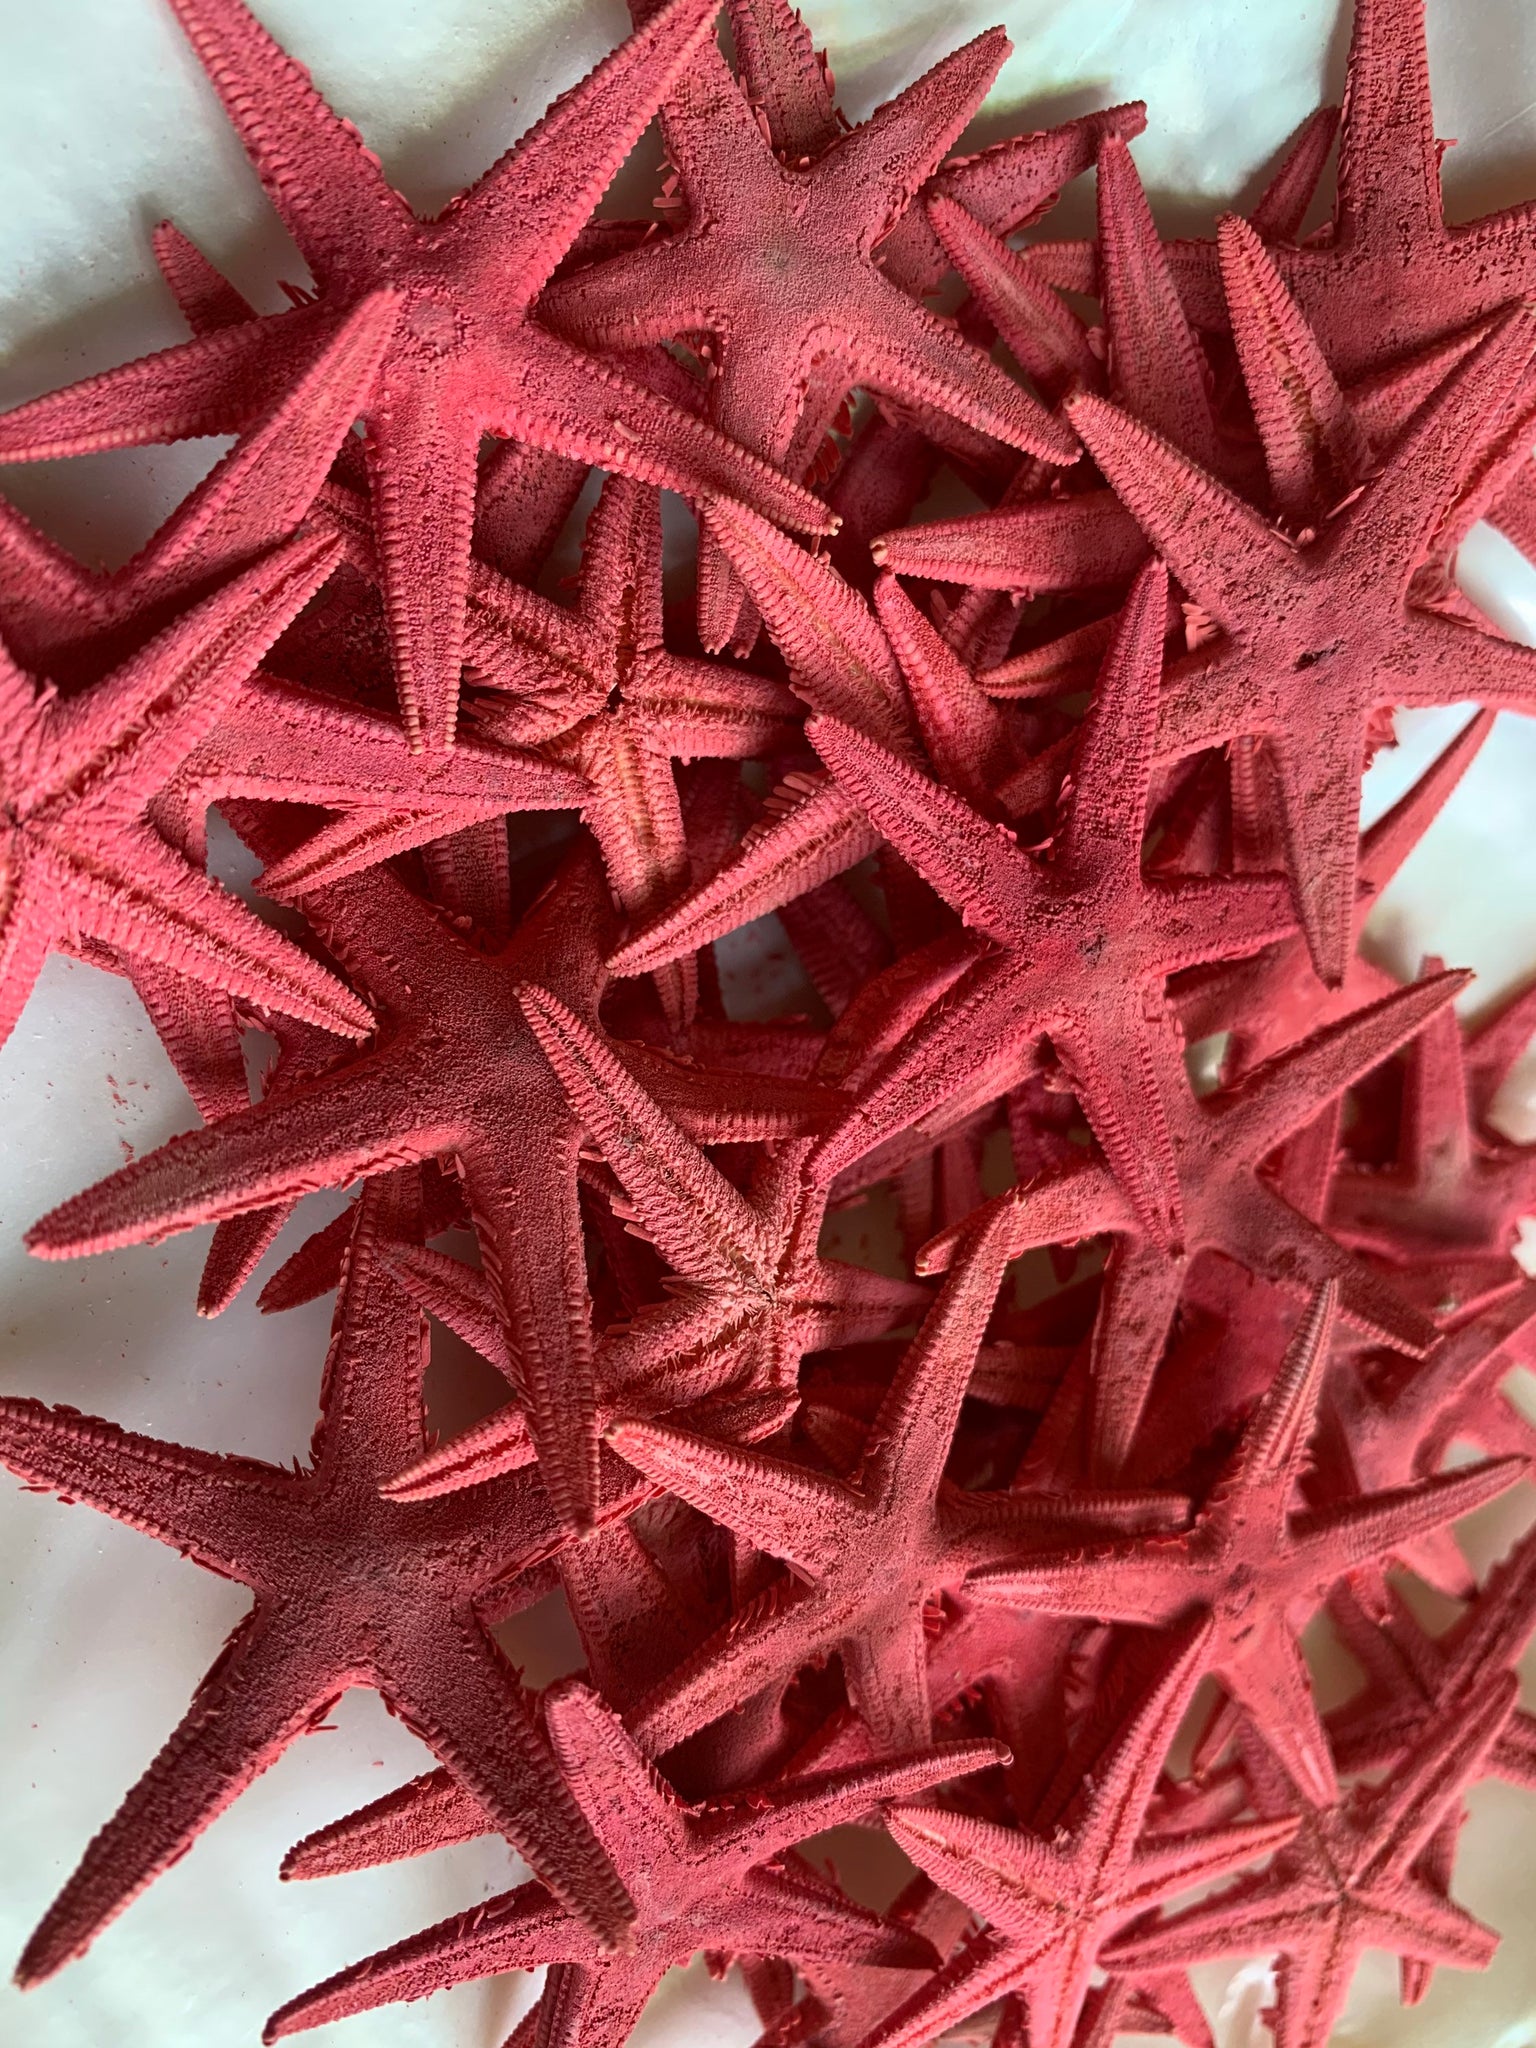 Tan/Orange Flat Starfish 2-2.5- Starfish - Craft Supplies